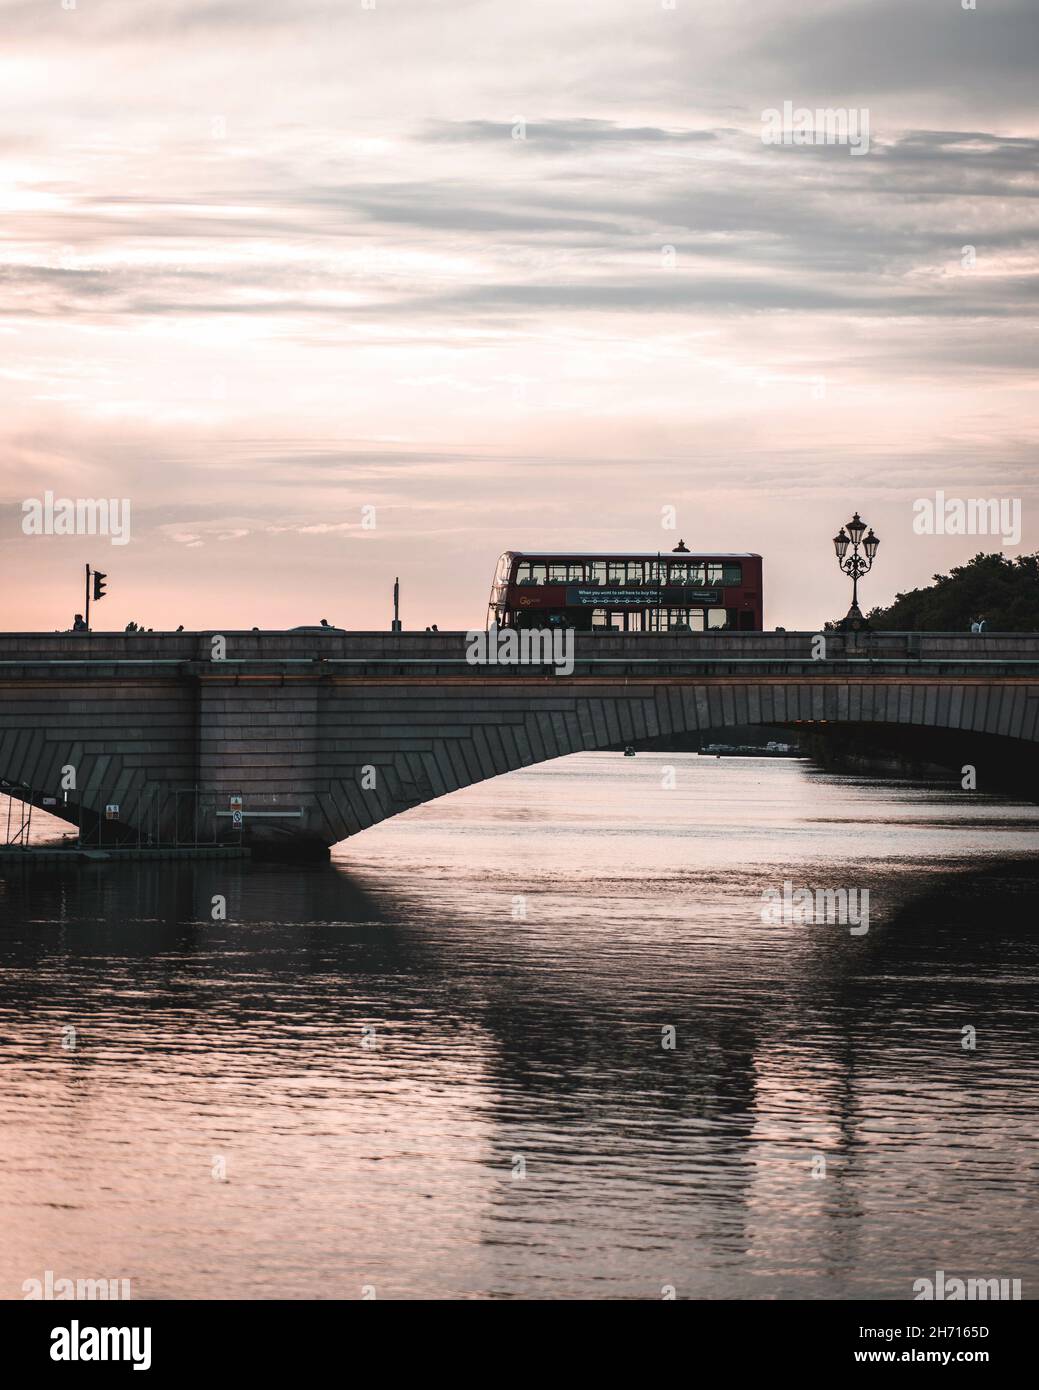 LONDON, UNITED KINGDOM - Aug 28, 2021: A beautiful sunset over the Putney bridge in London Stock Photo